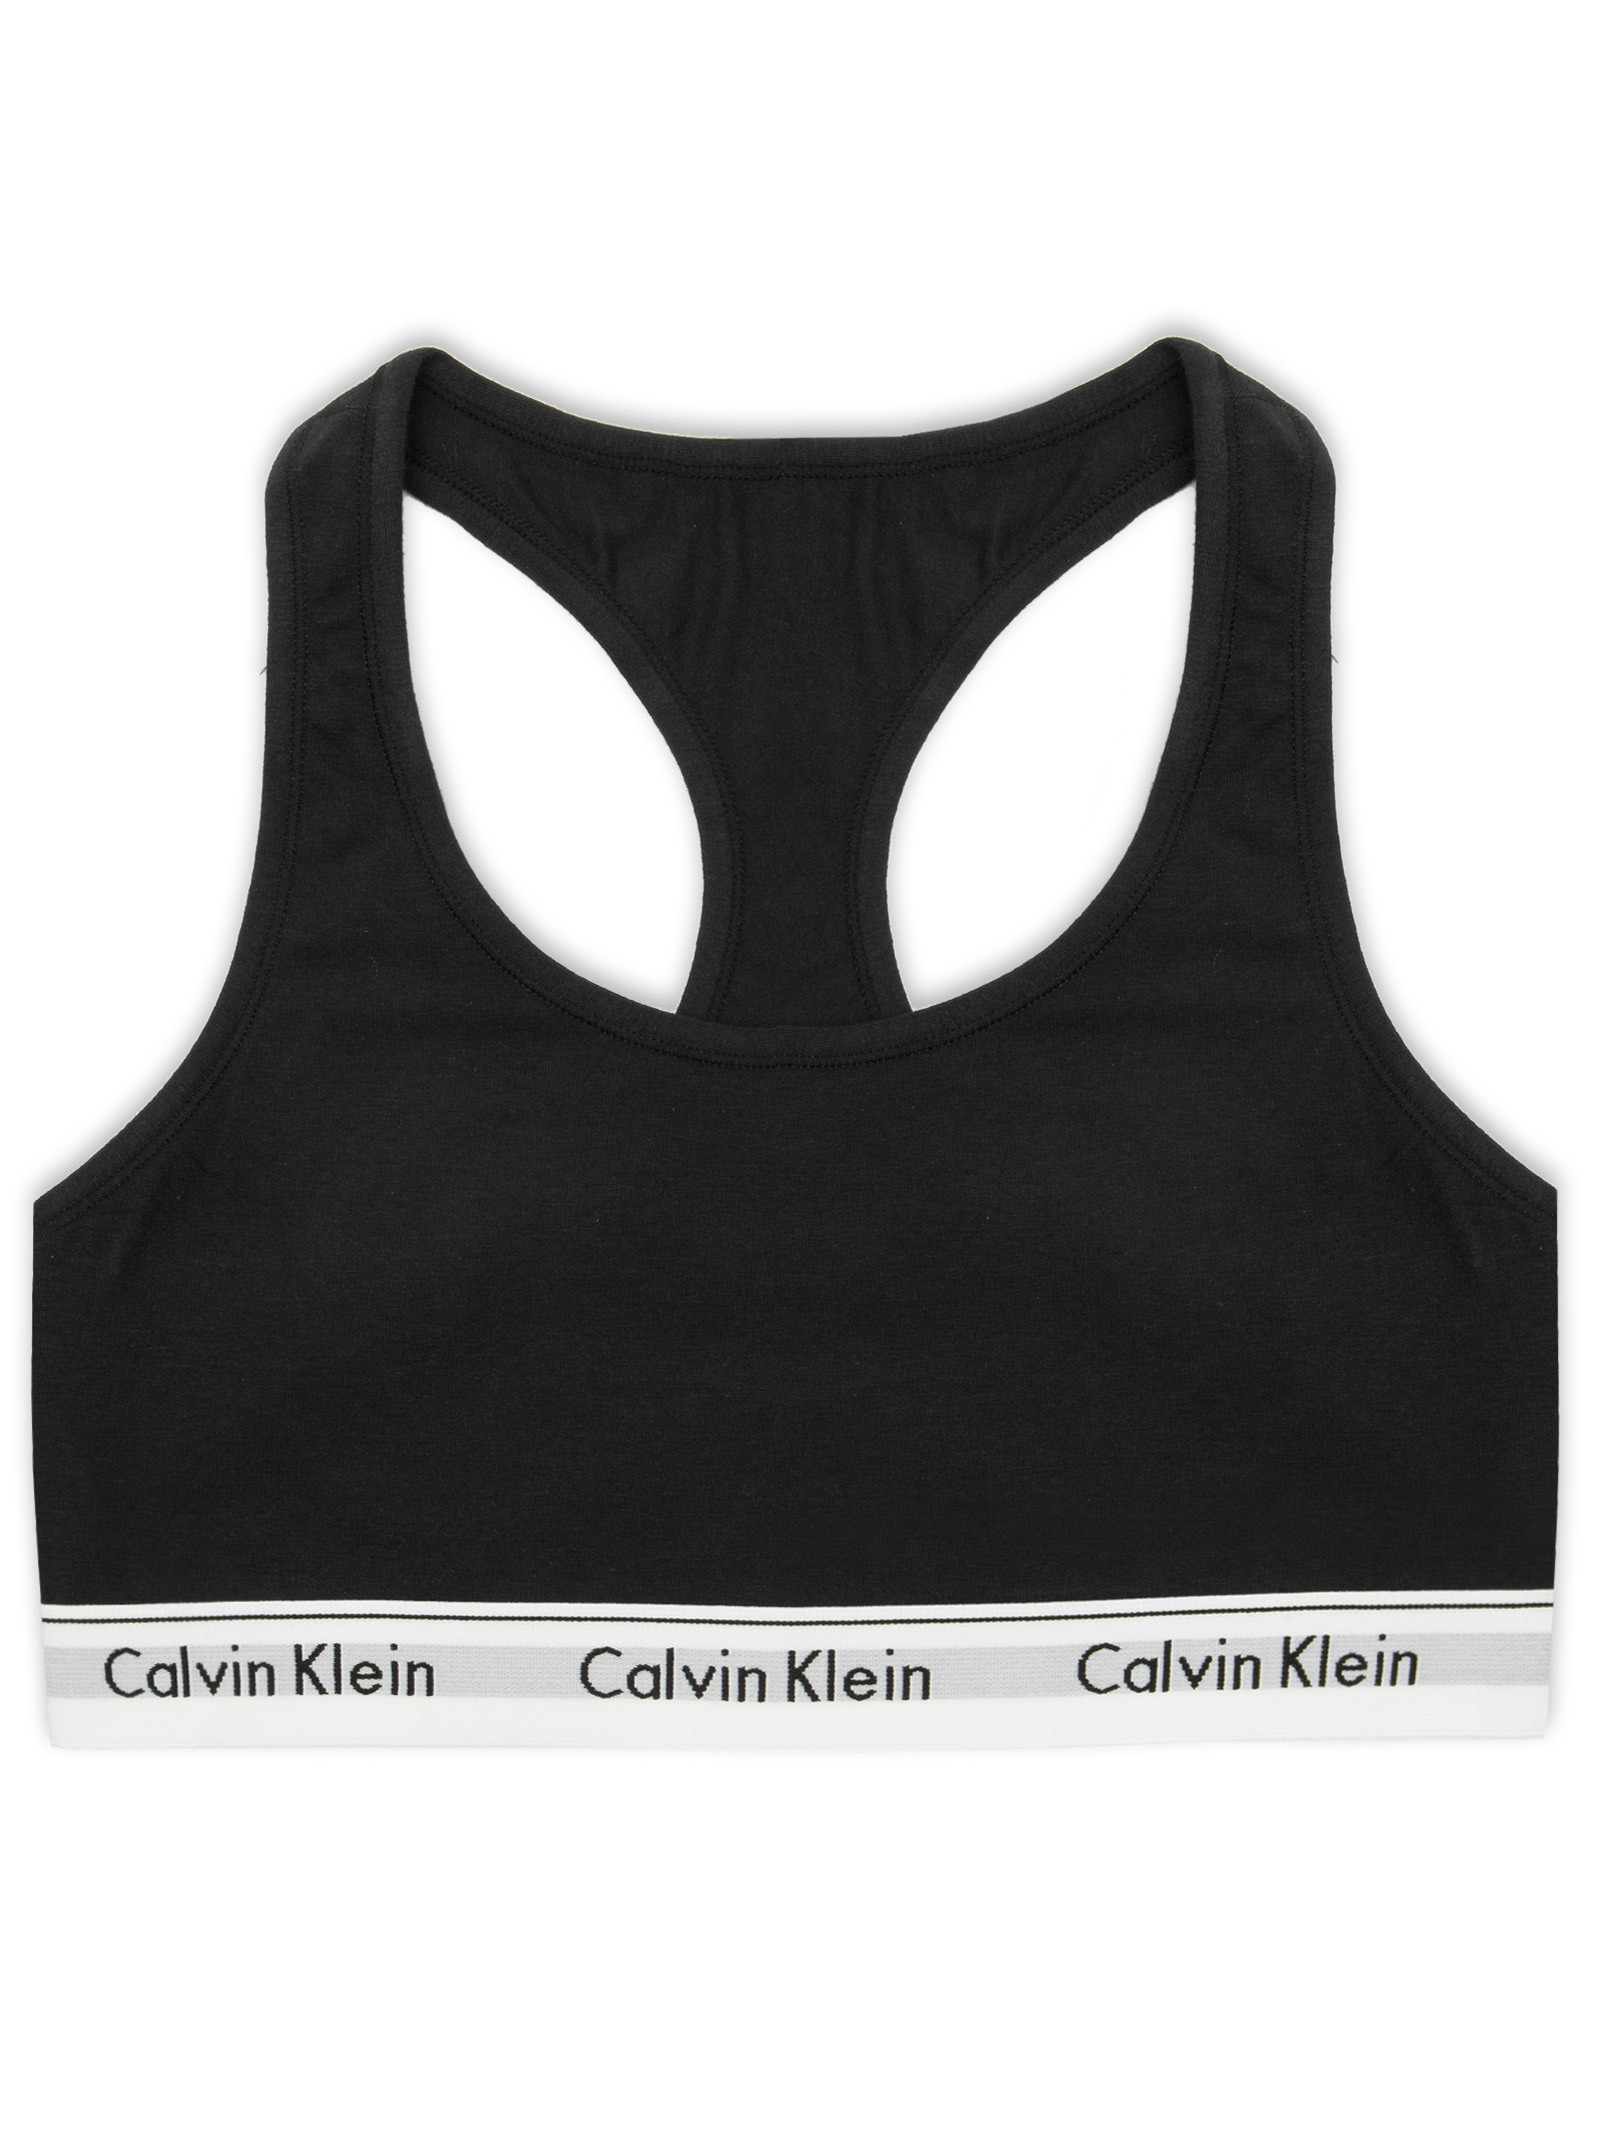 Top Feminino Nadador Elástico Com Logo Plus Size Underwear Calvin Klein -  Preto - Renner